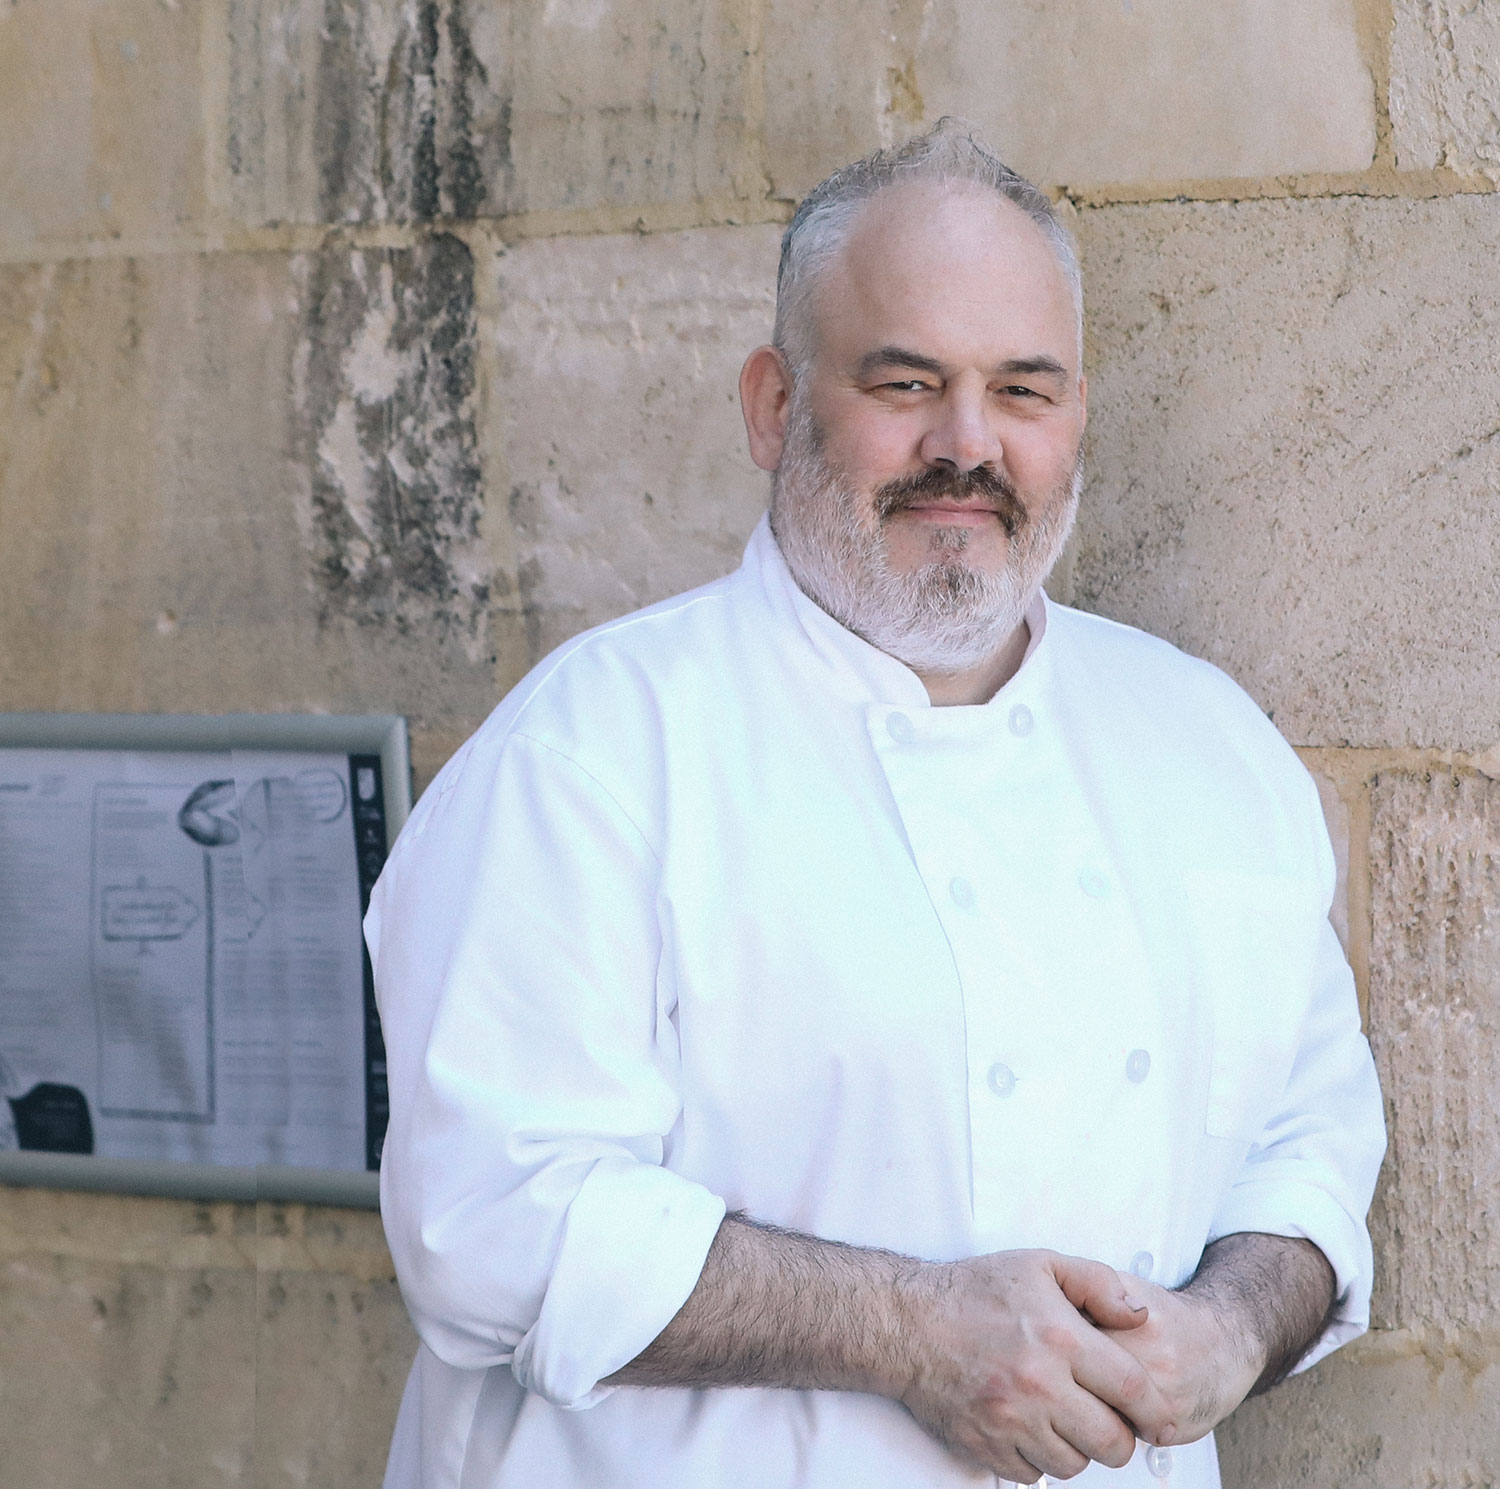 Chef Paul Wilson has created a new menu at Morgan's Sorrento